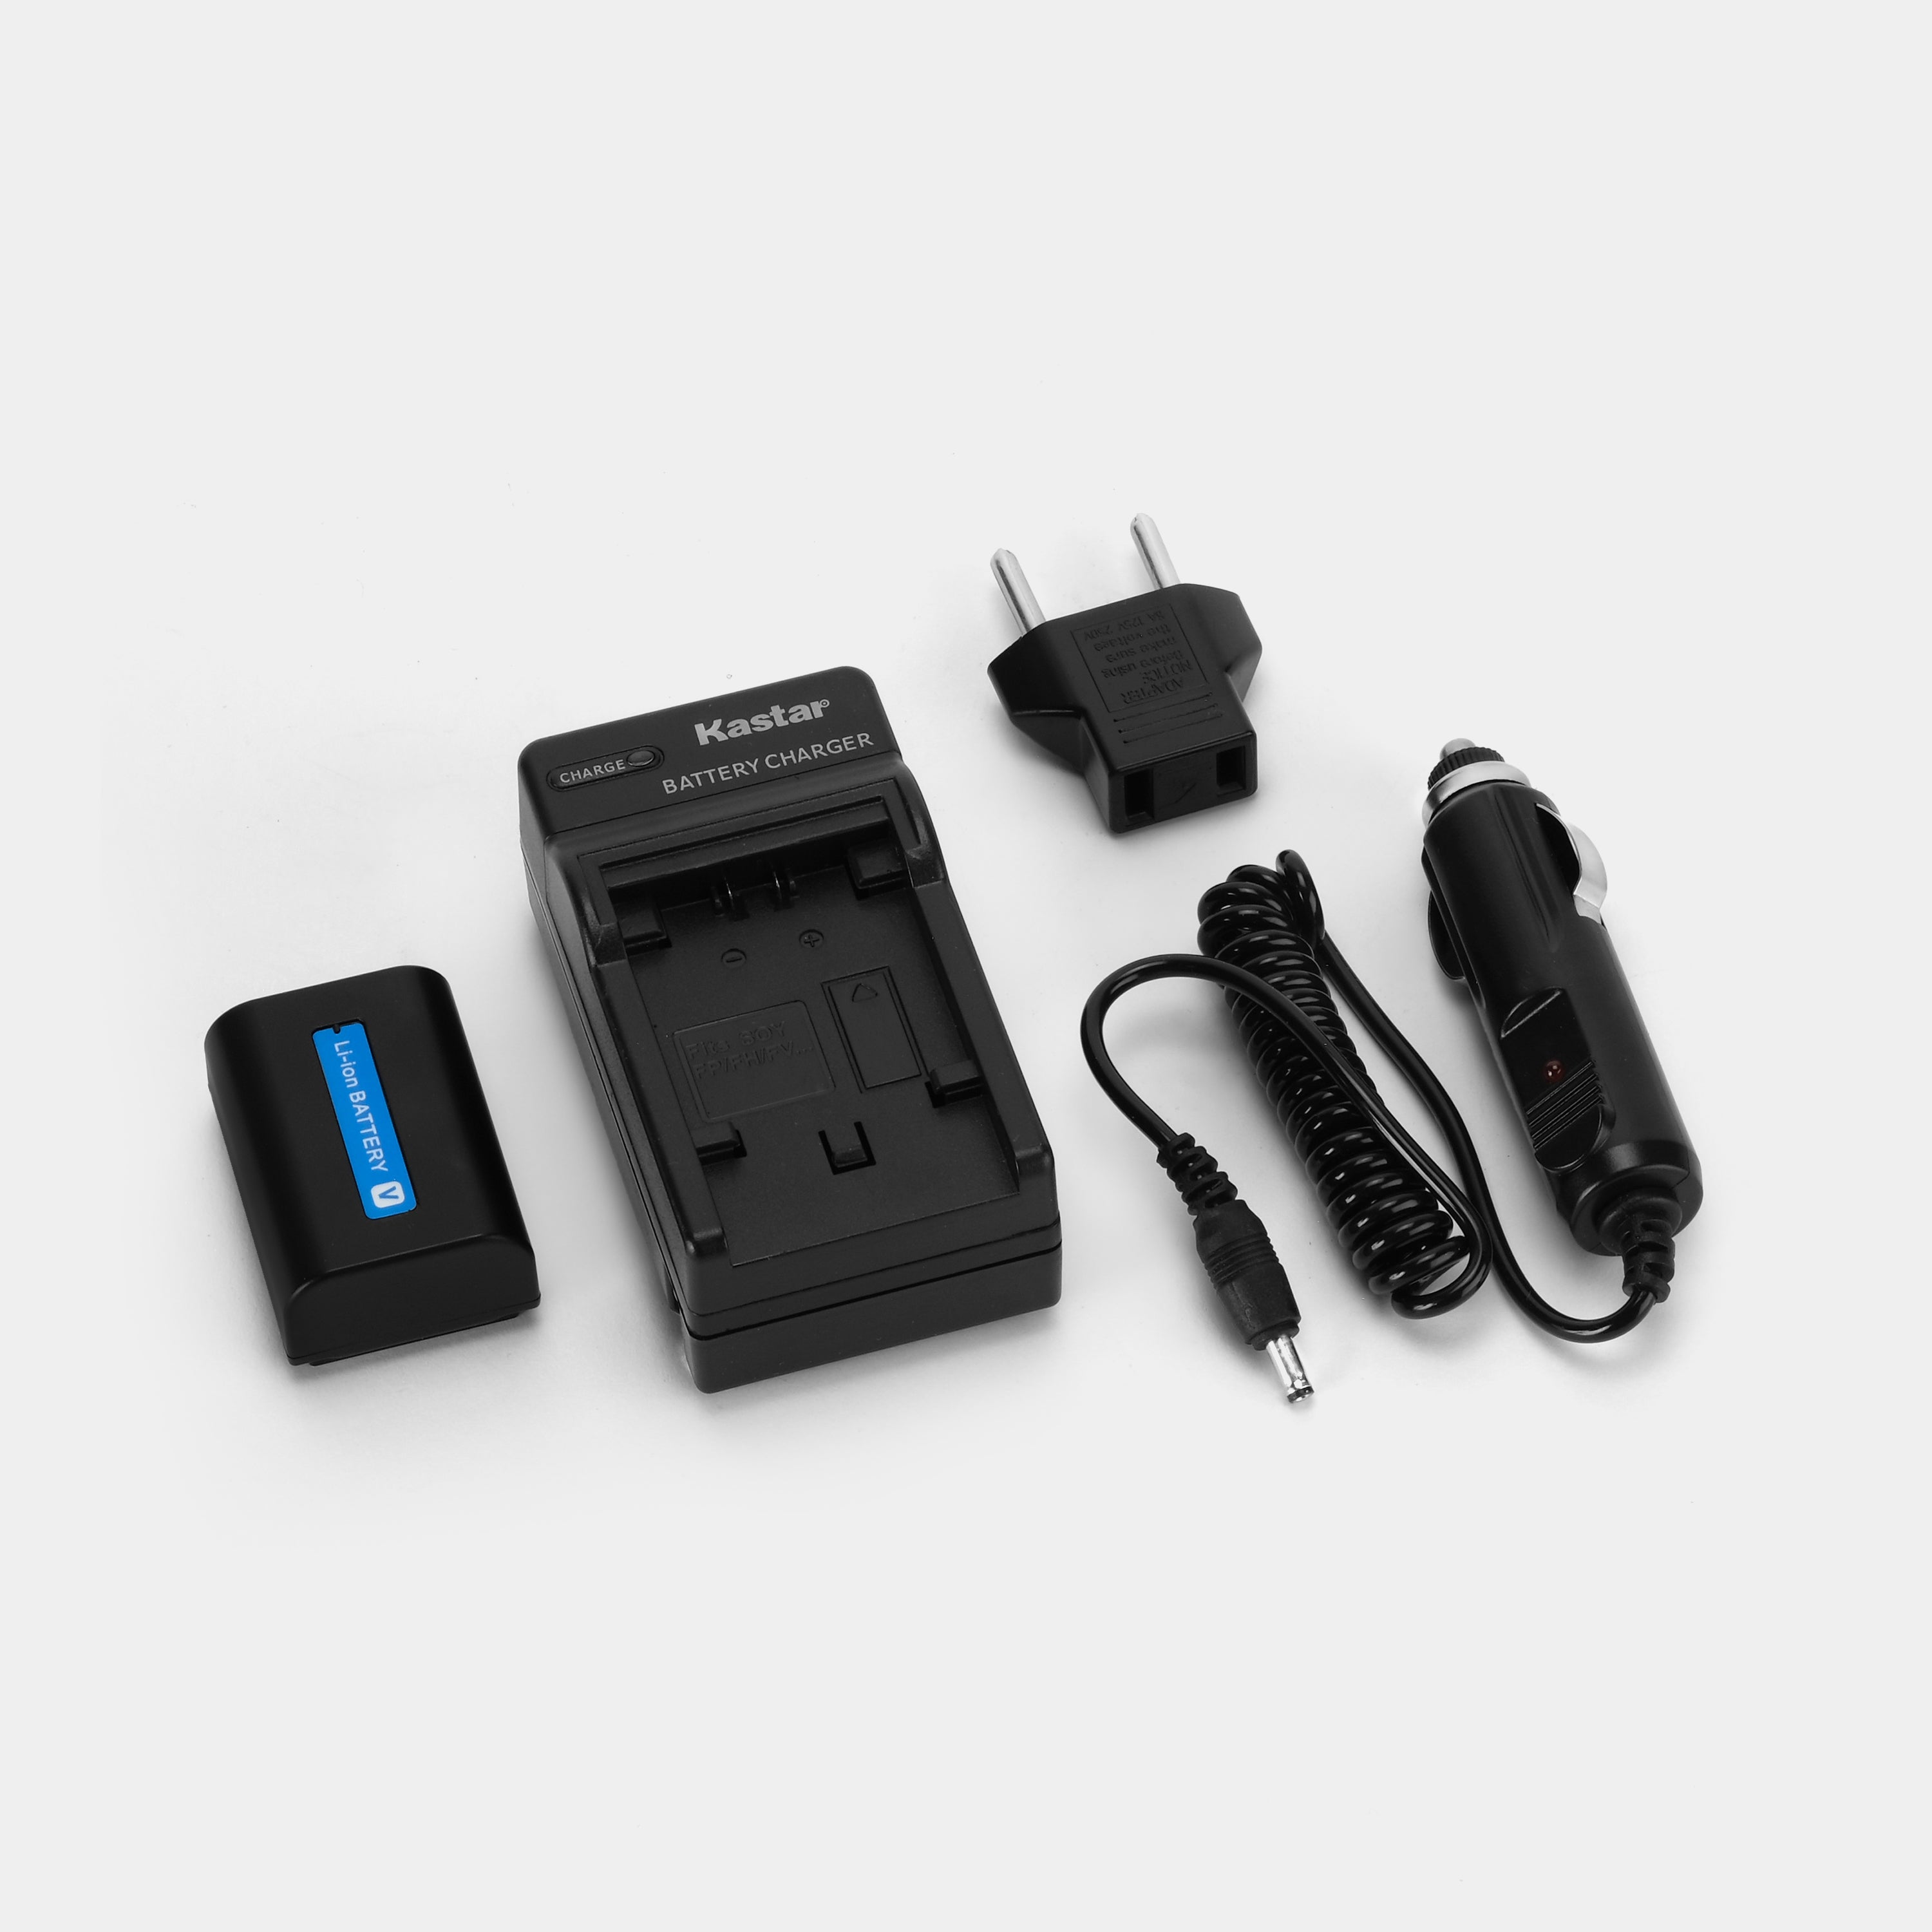 Sony Handycam DCR-SX85 Digital Video Camcorder